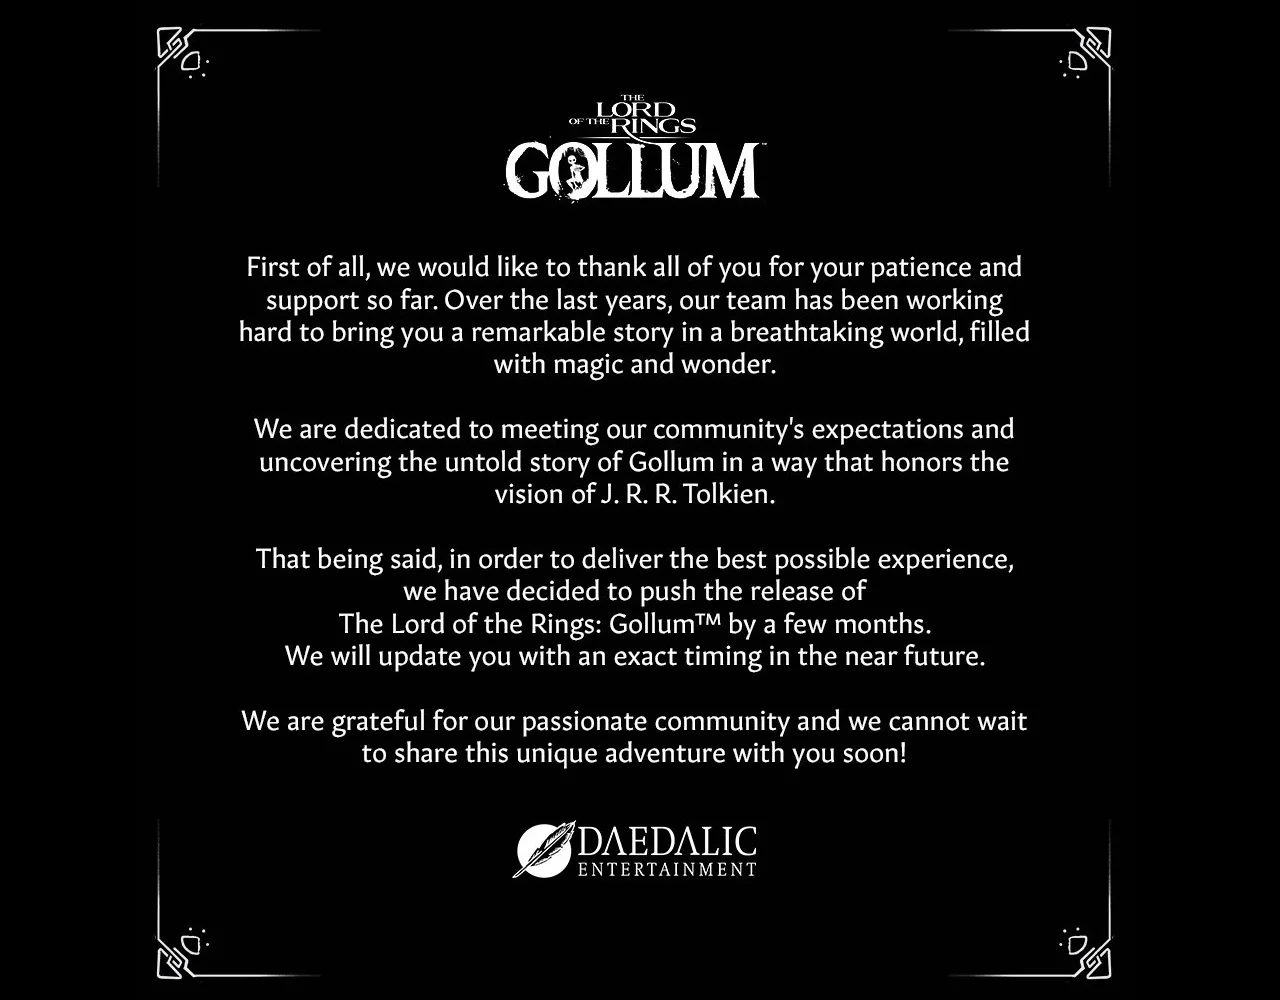 The Lord of the Rings: Gollum отложили на несколько месяцев - фото 1